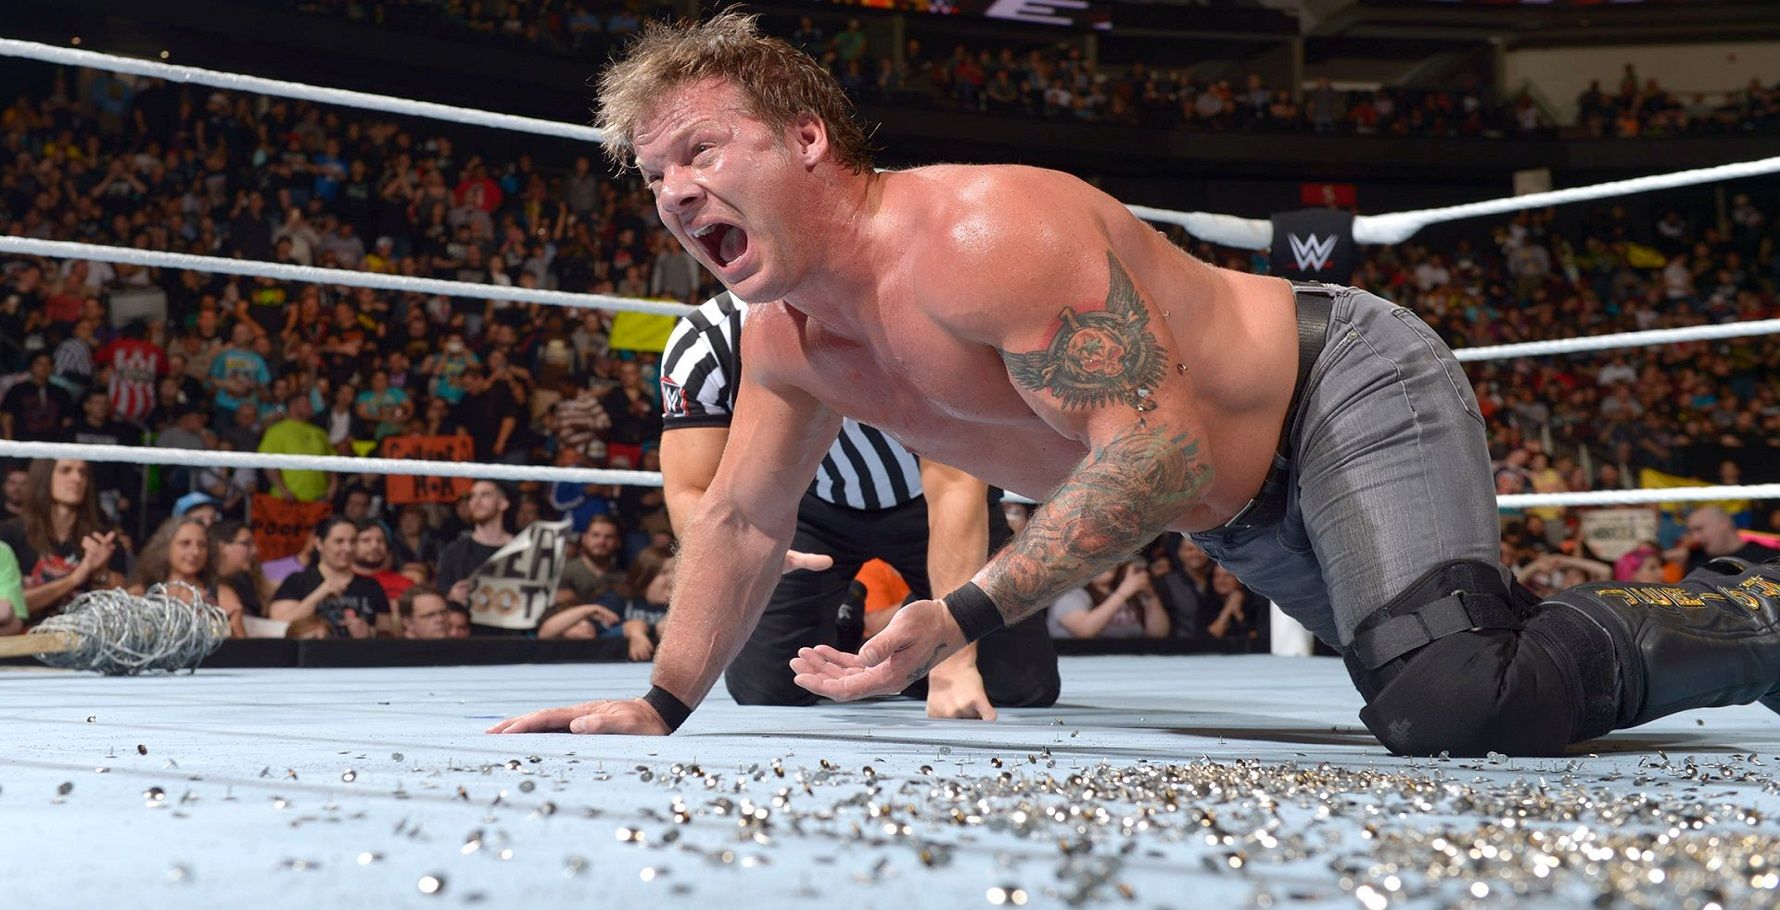 Wwe на русском от 545. Фитсборн Джерико. Chris Jericho attires WWE.